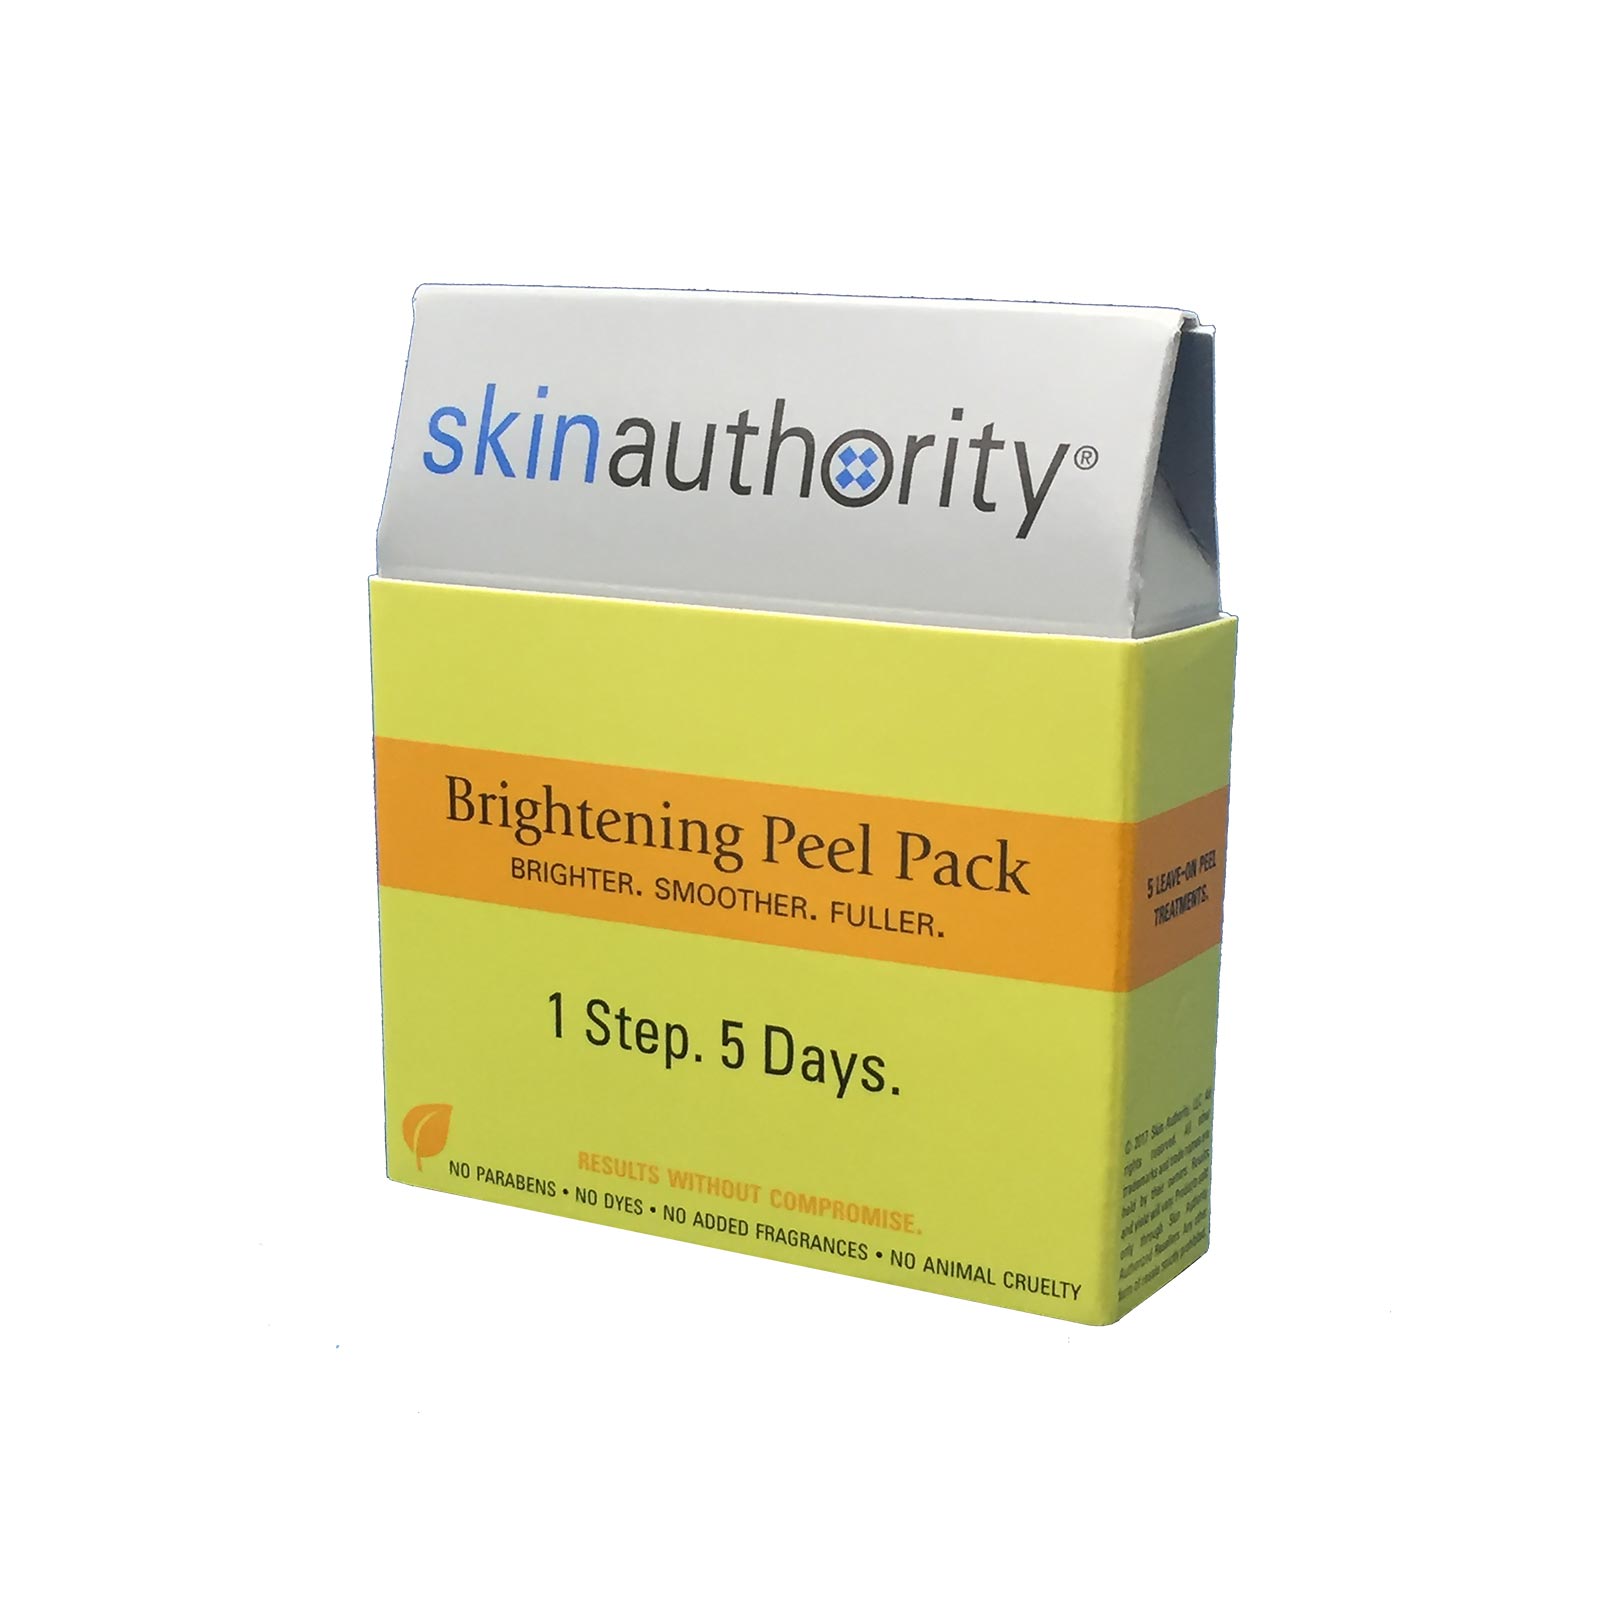 Brightening Peel Pack by Skin Authority